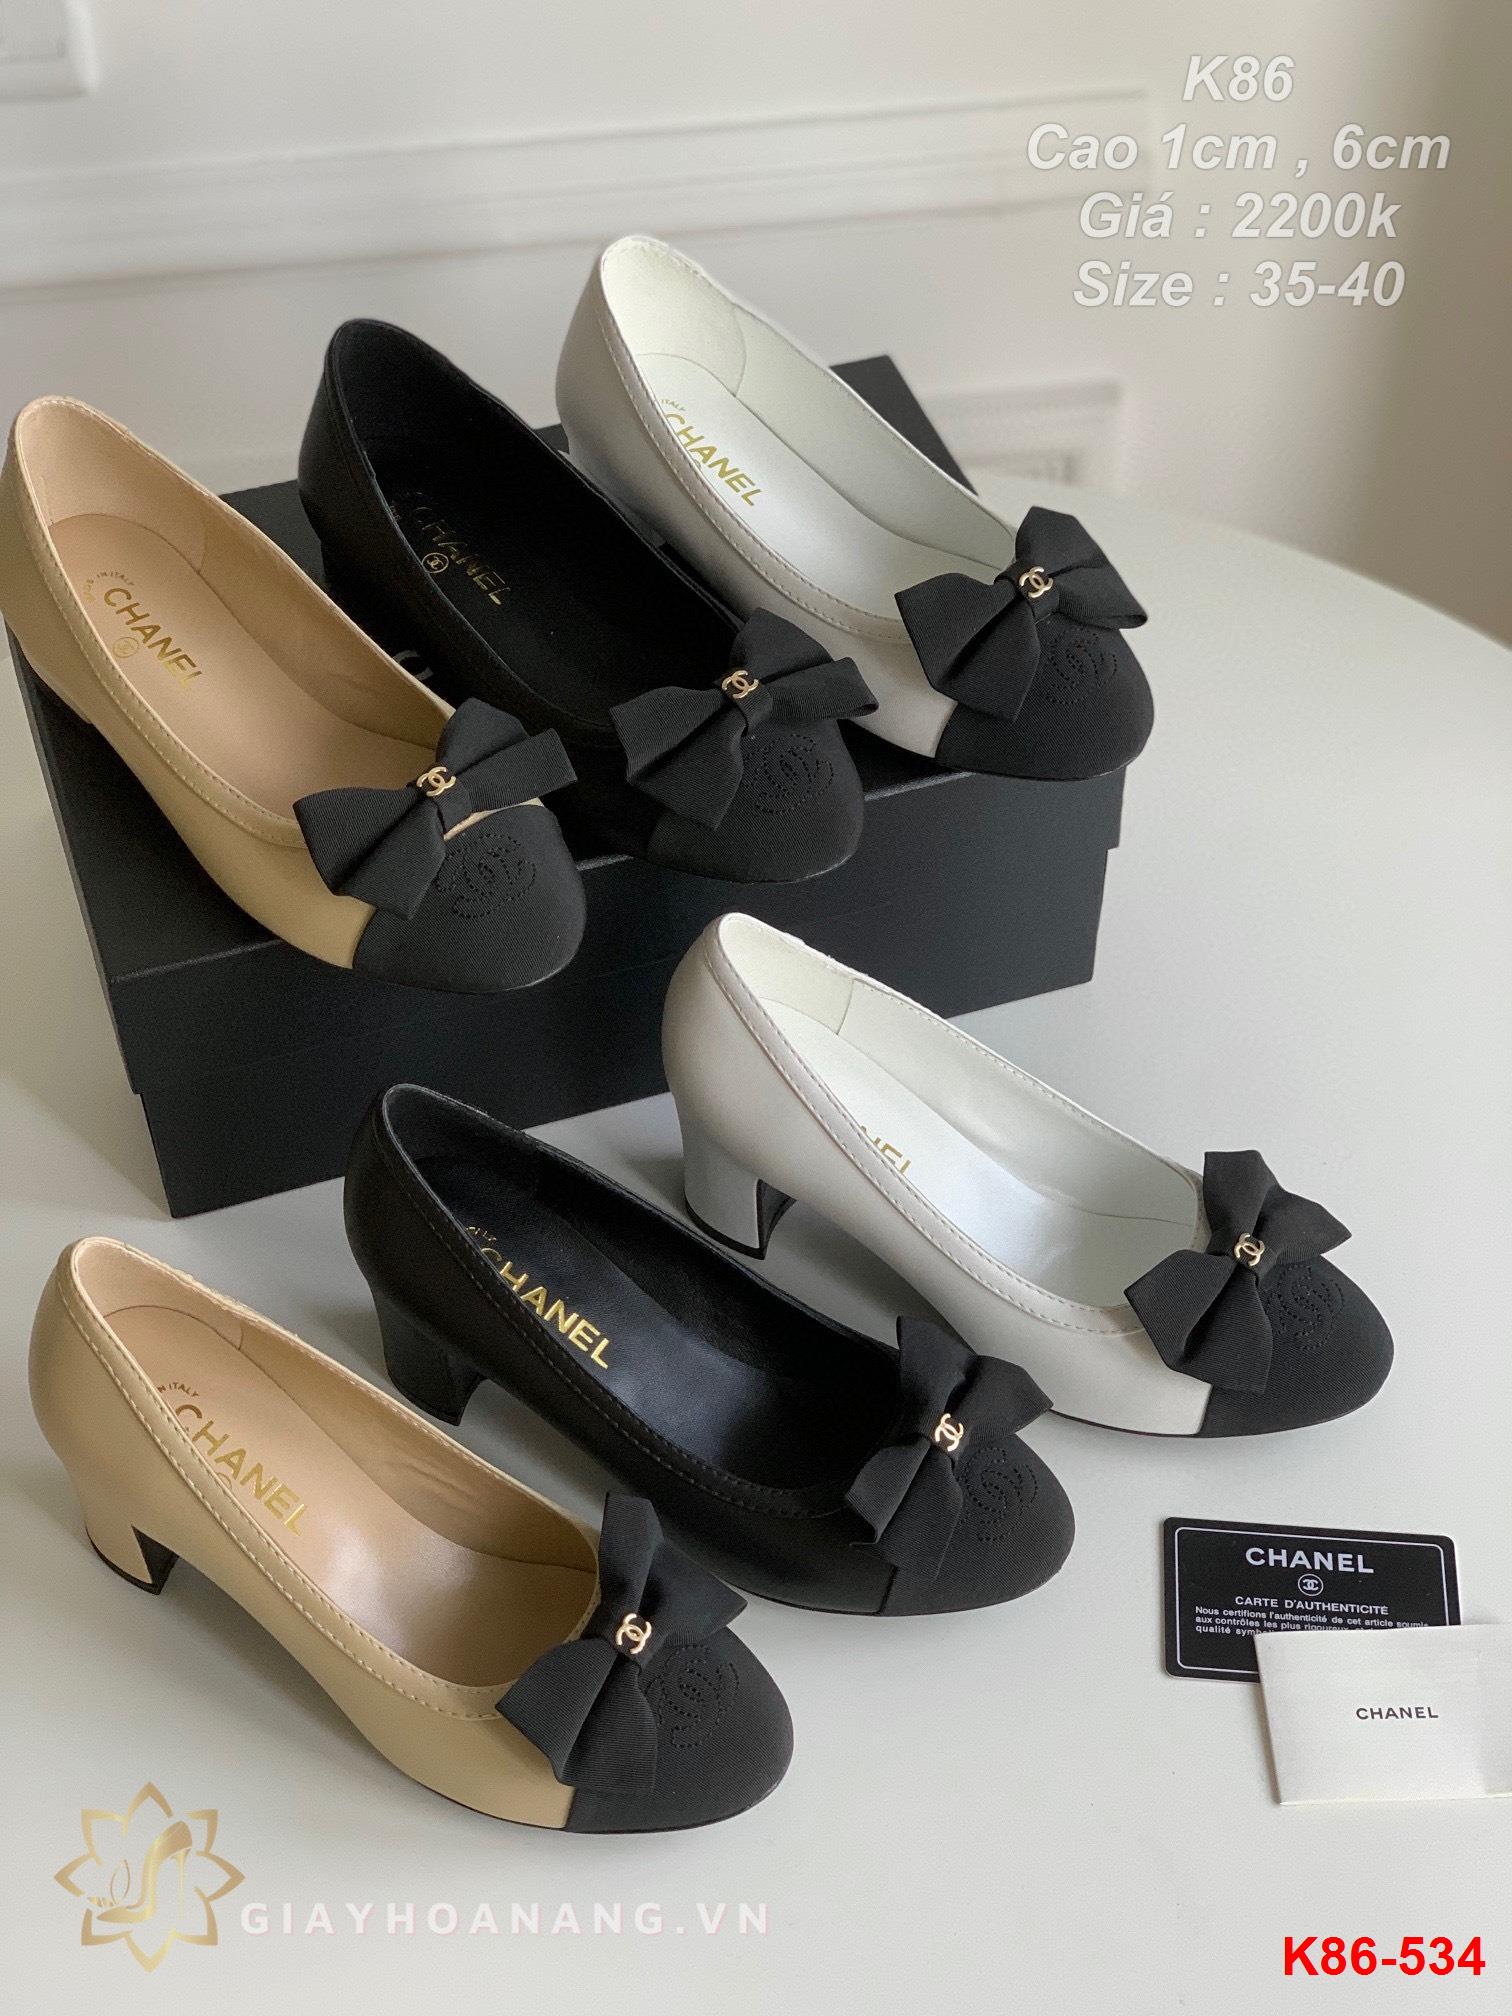 K86-534 Chanel giày cao 1cm , 6cm siêu cấp